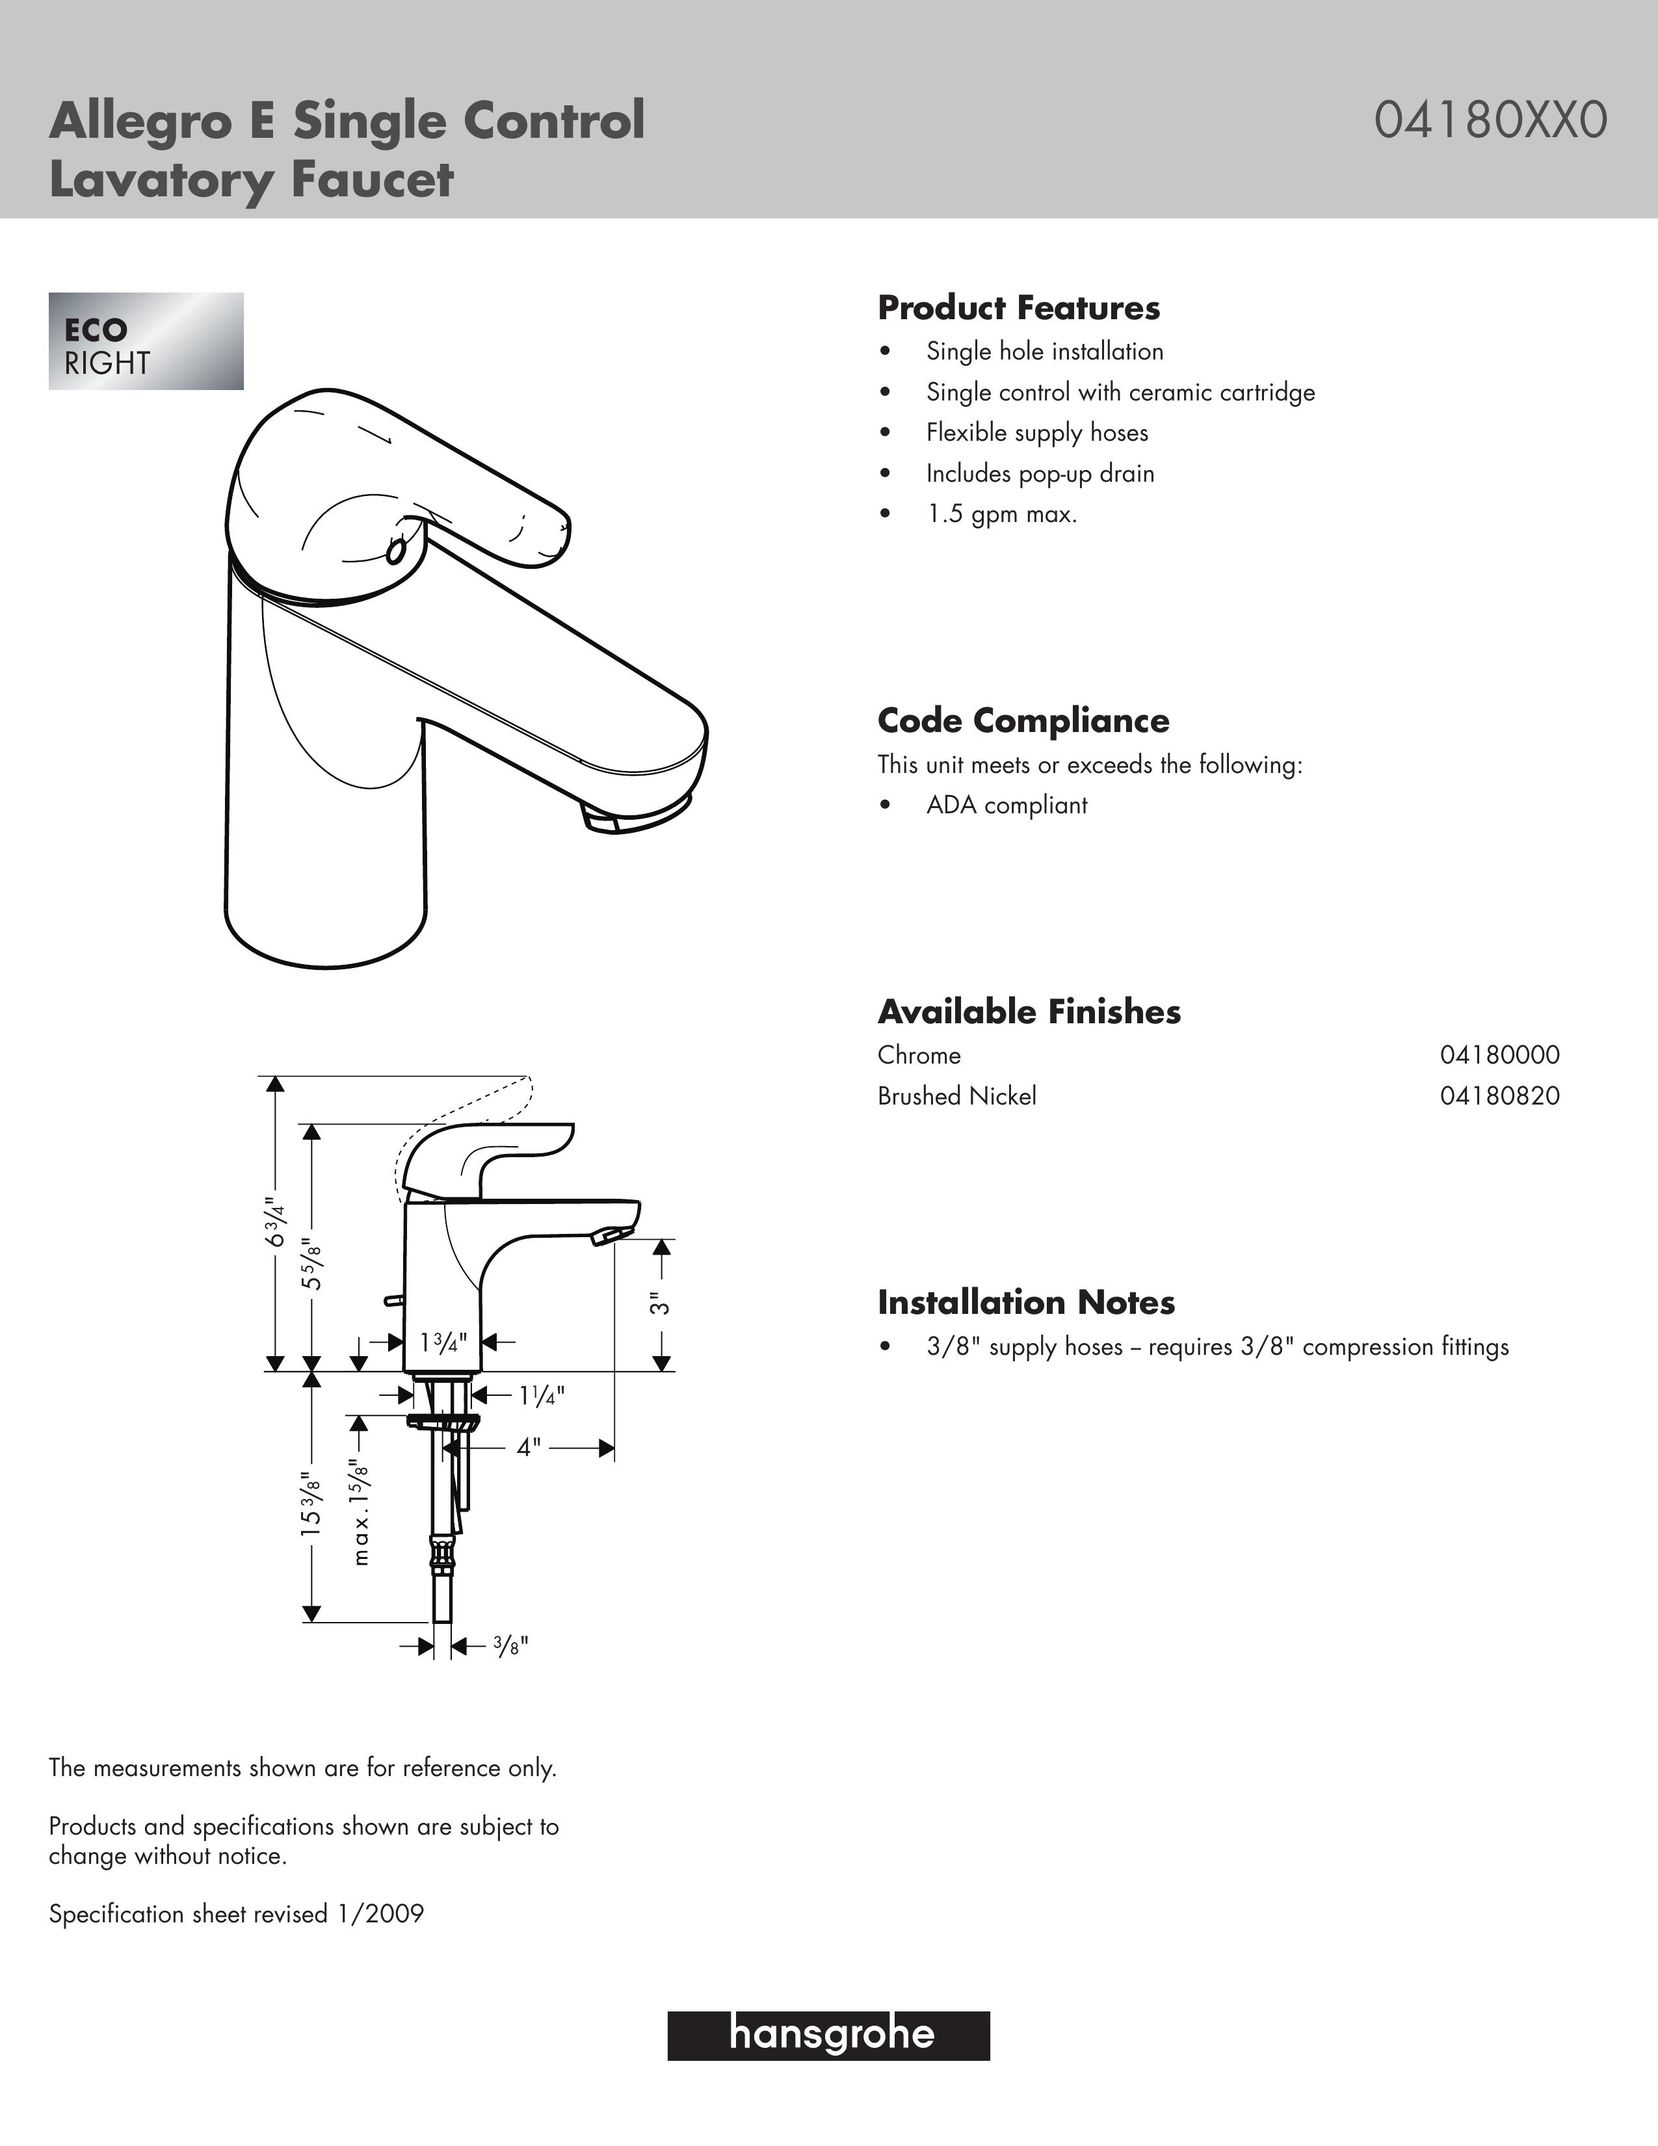 Hans Grohe 04180XX0 Indoor Furnishings User Manual